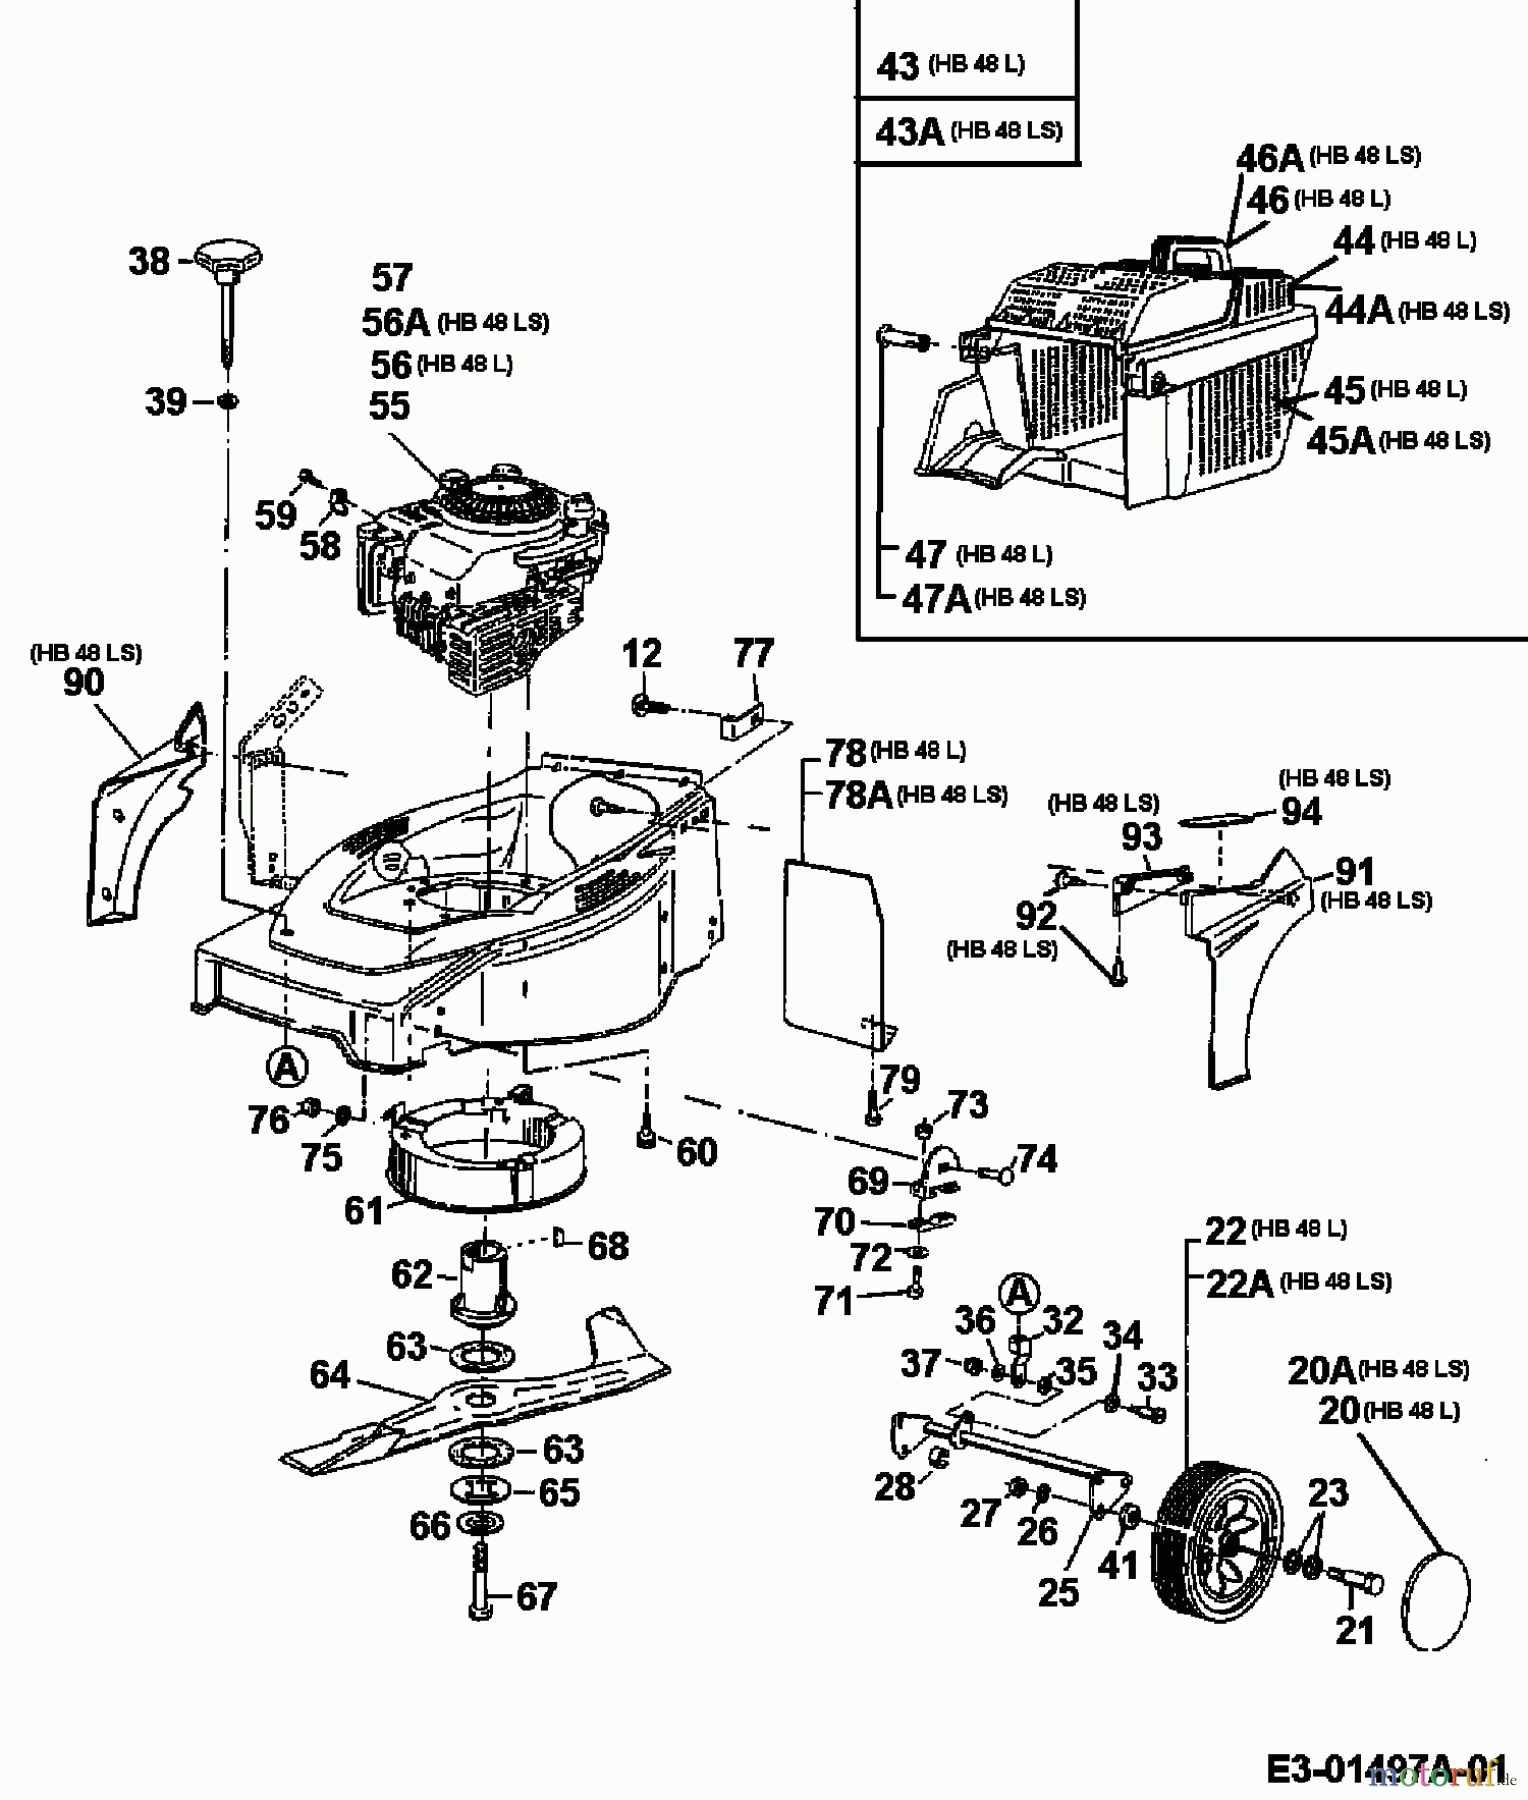  Gutbrod Petrol mower HB 48 L 11B-T58V604  (2000) Basic machine